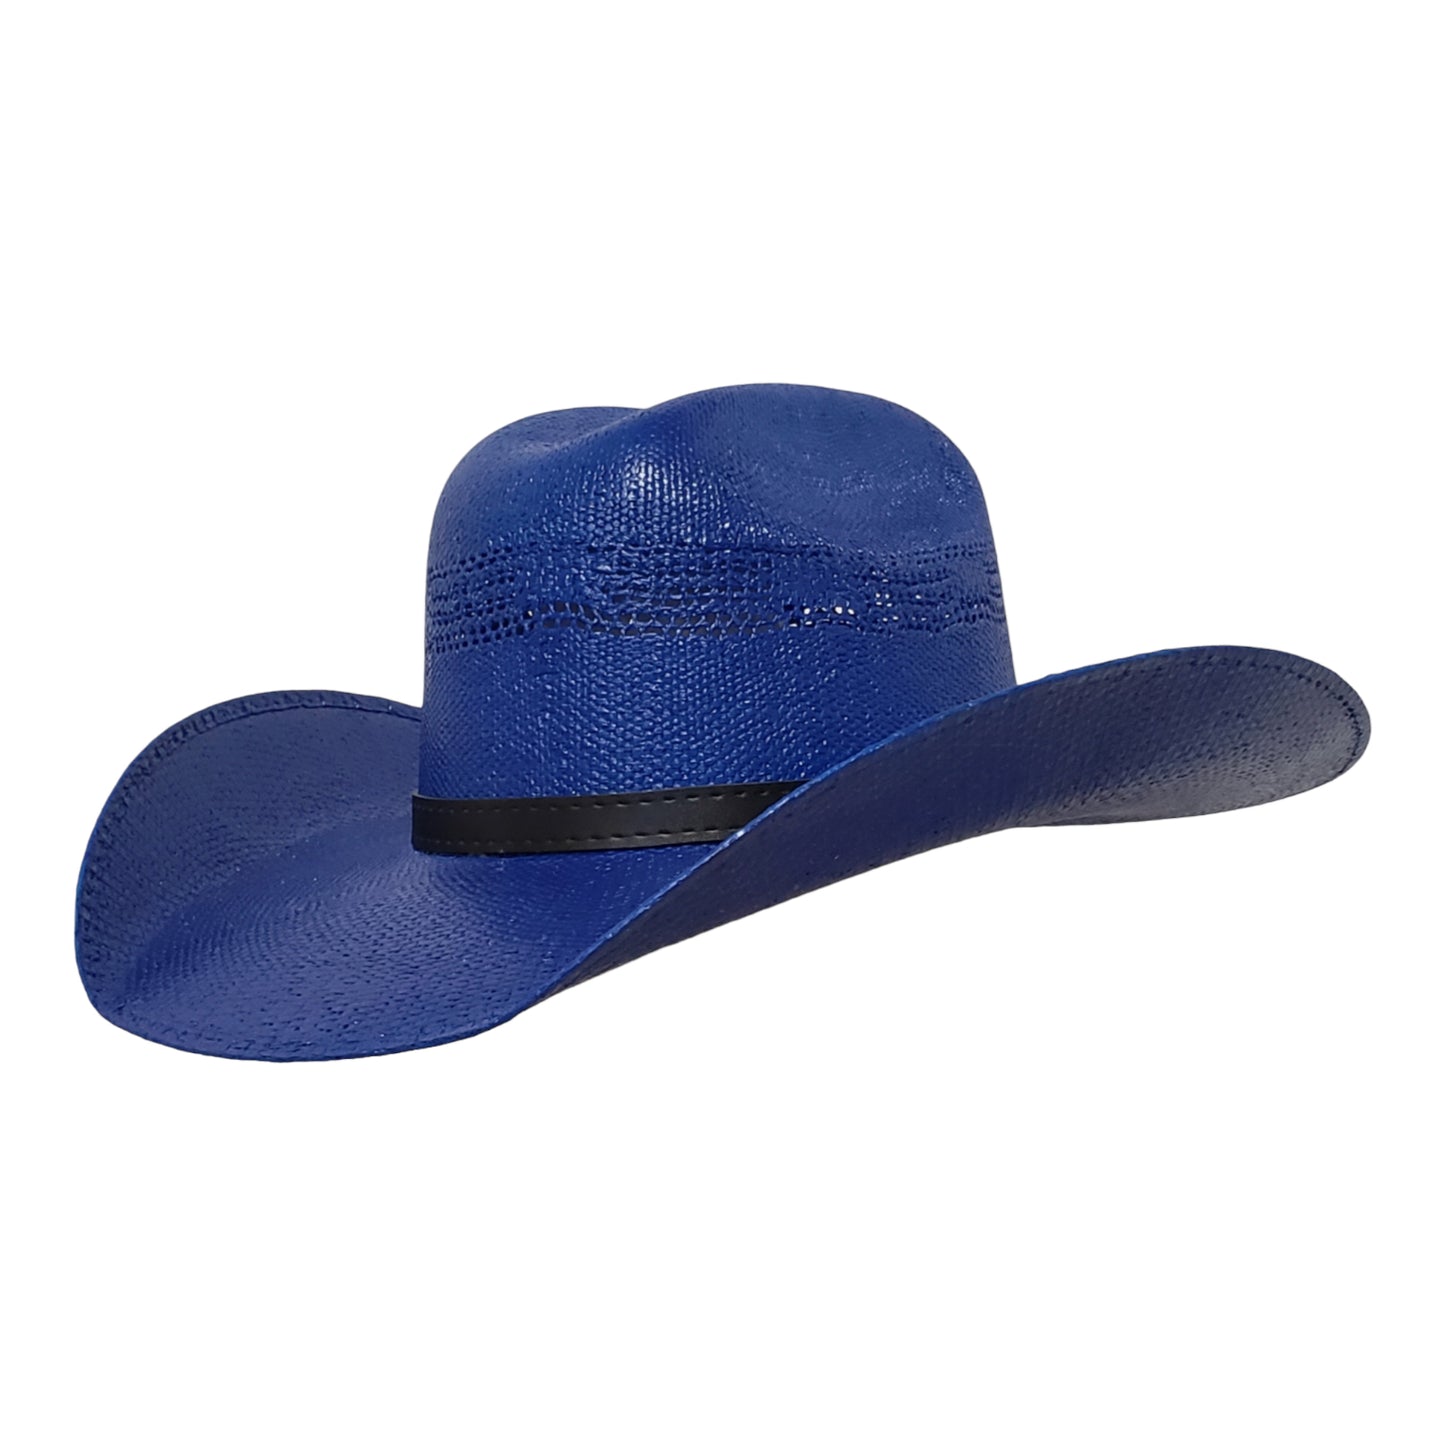 Royal blue cowgirl hat